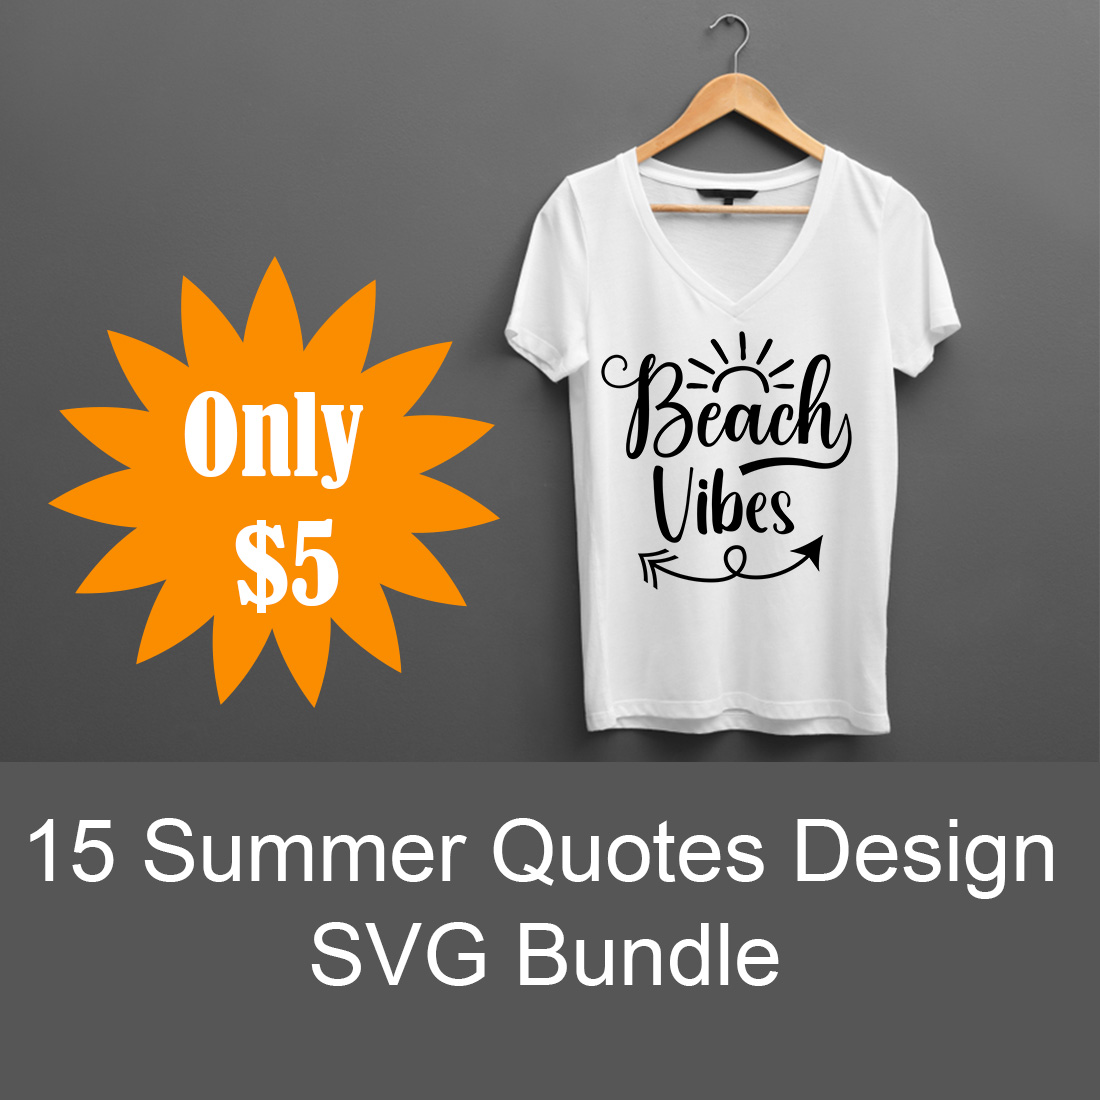 15 Summer Quotes Design SVG Bundle cover image.